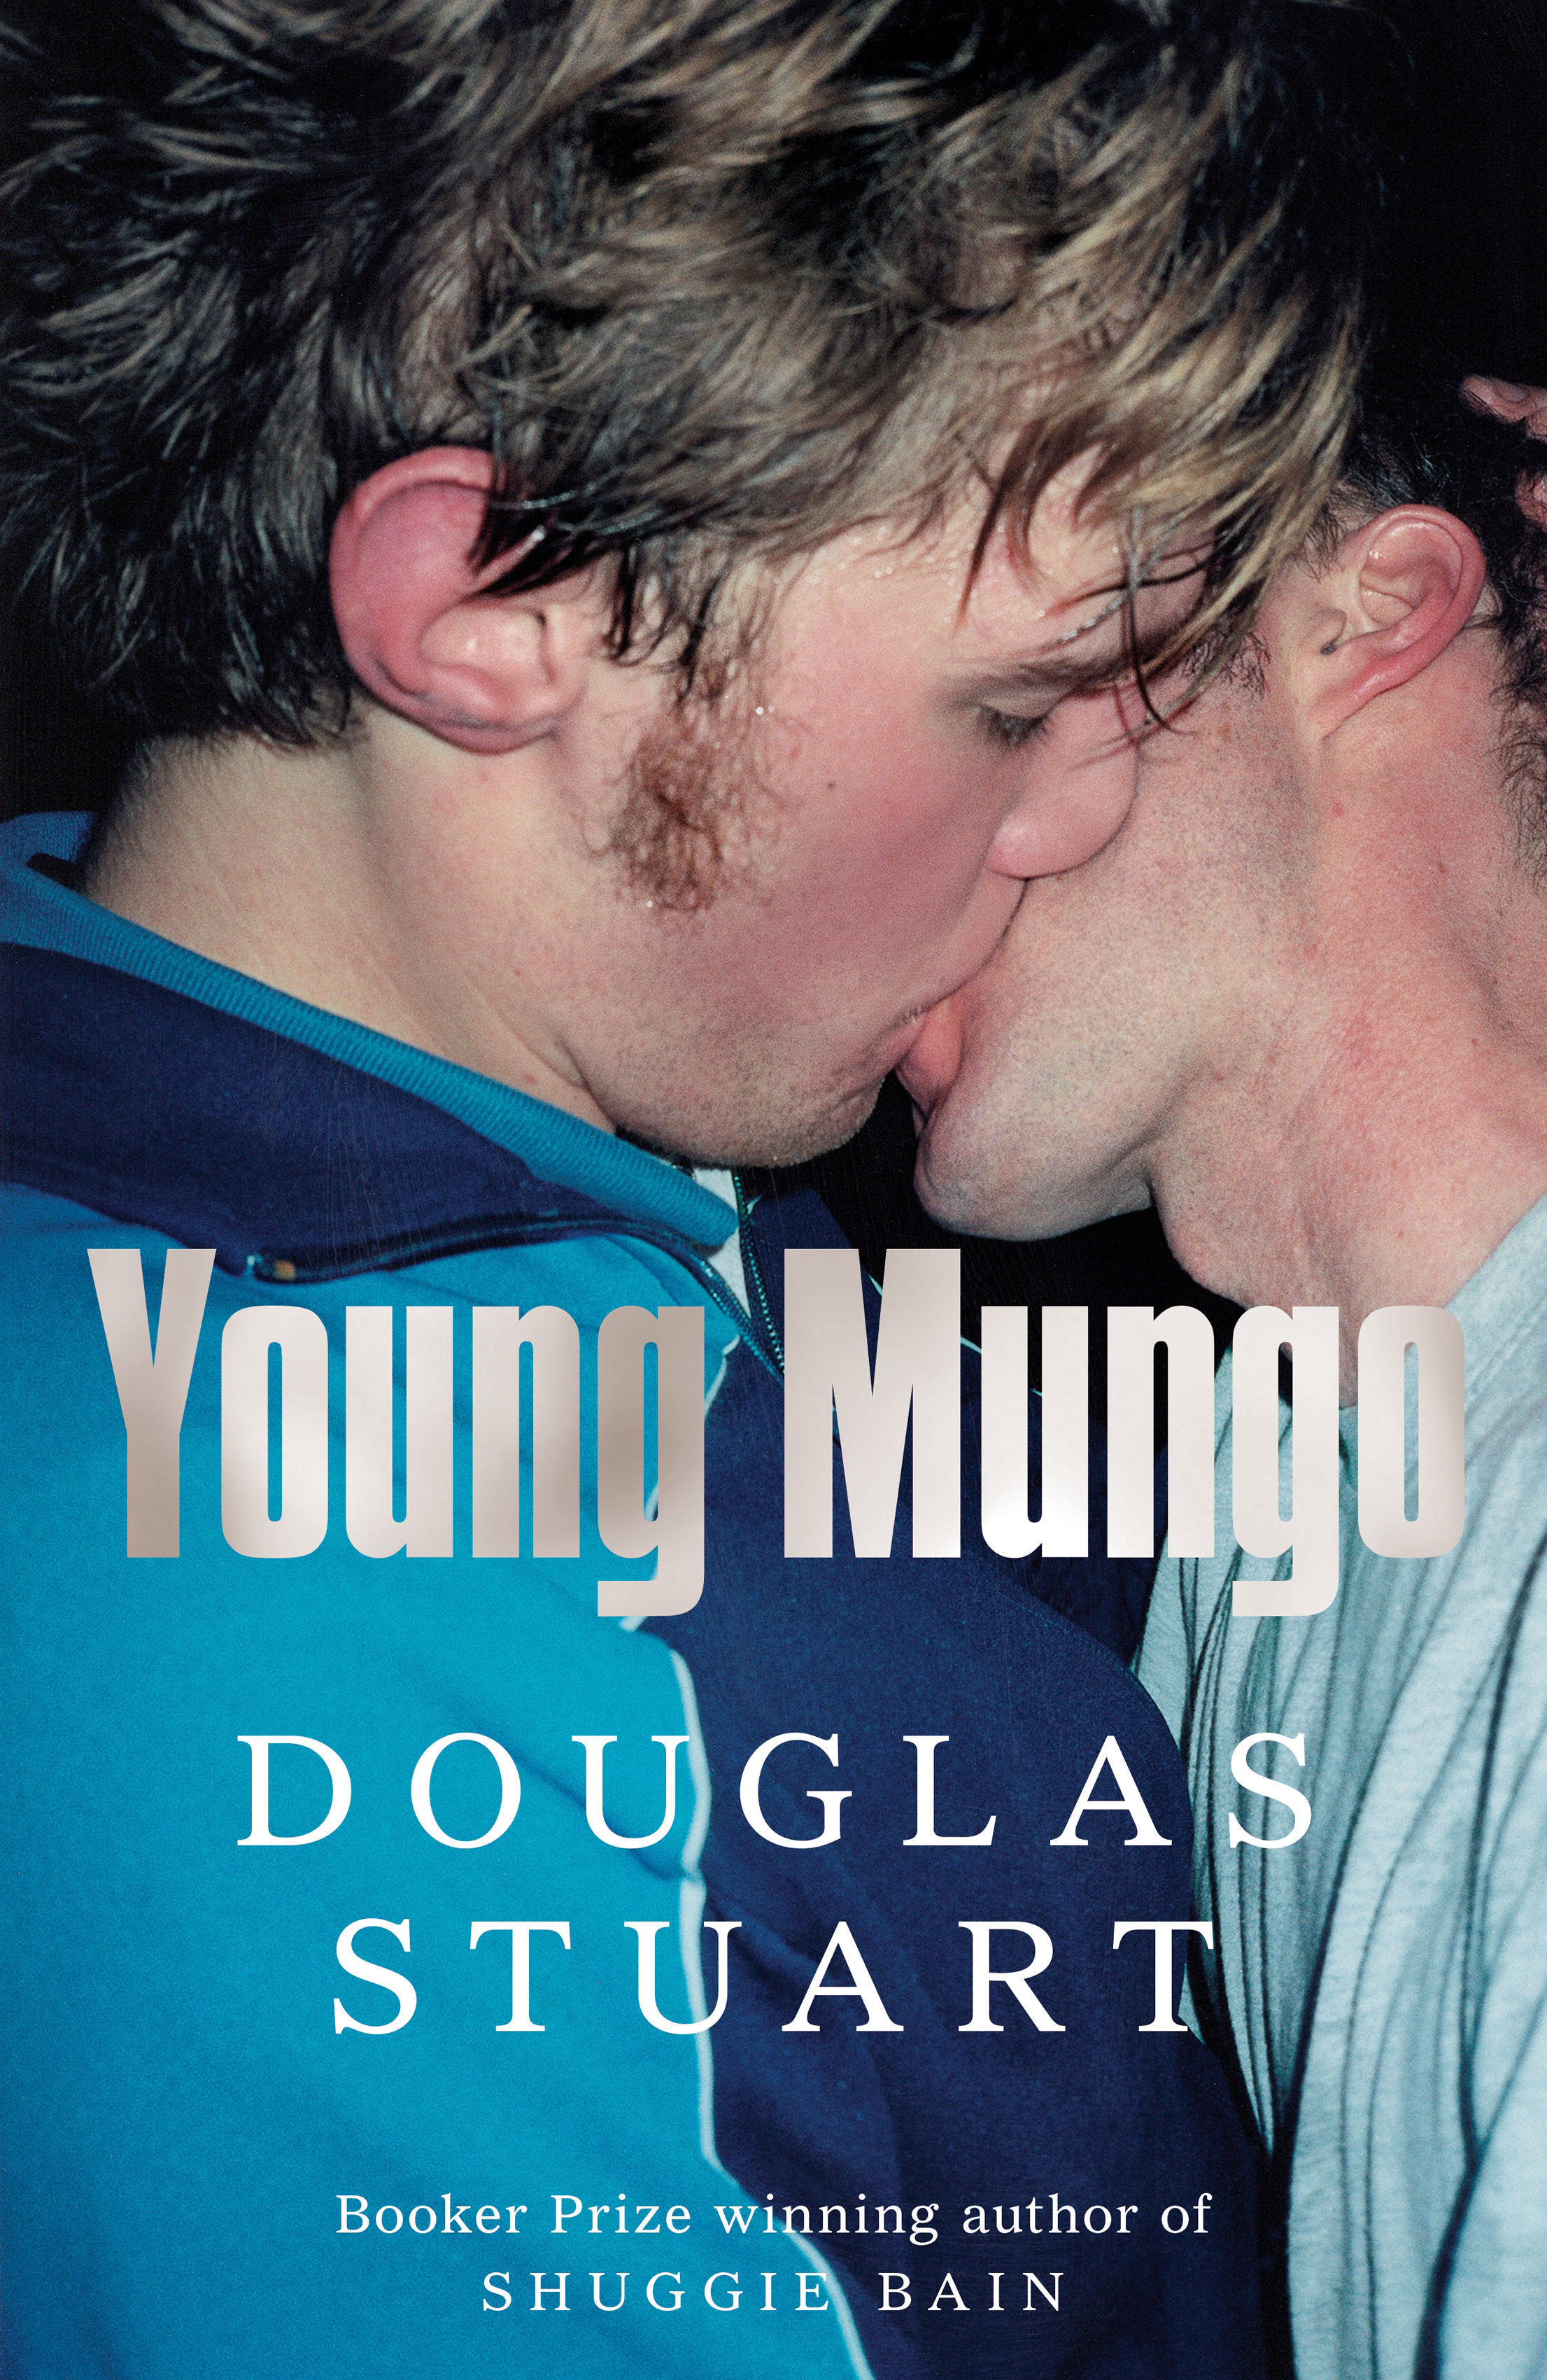 Young Mungo is the second novel by Douglas Stuart